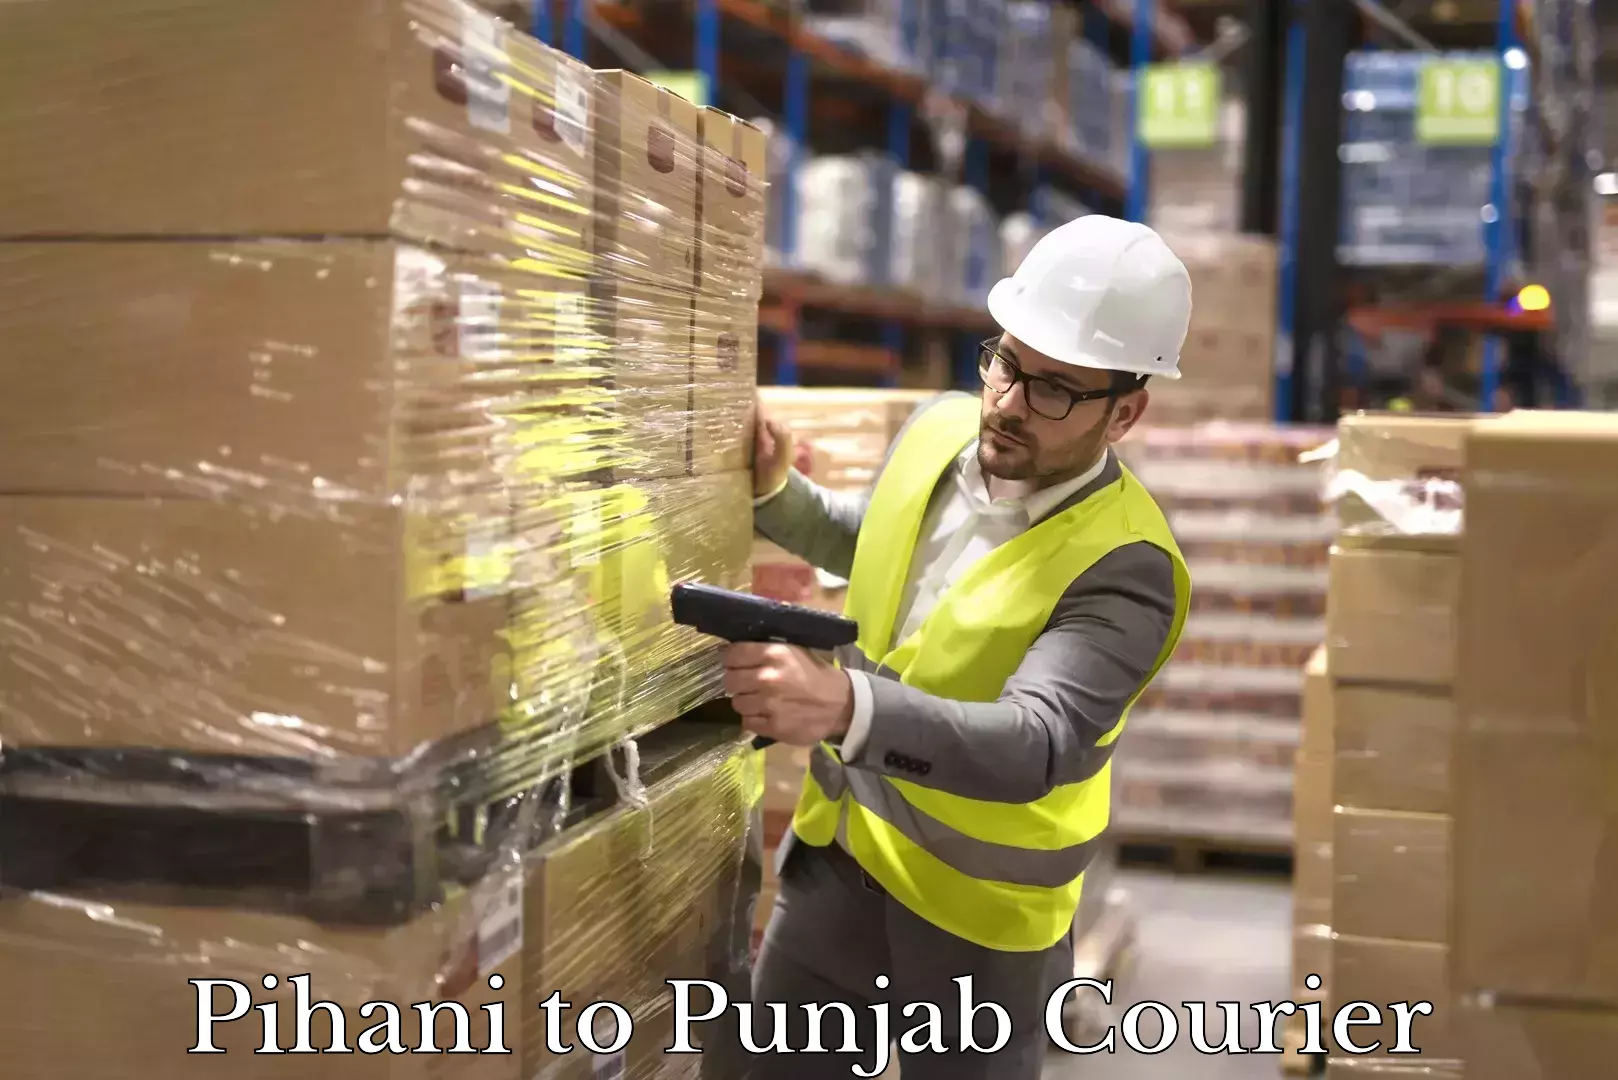 Nationwide delivery network Pihani to Punjab